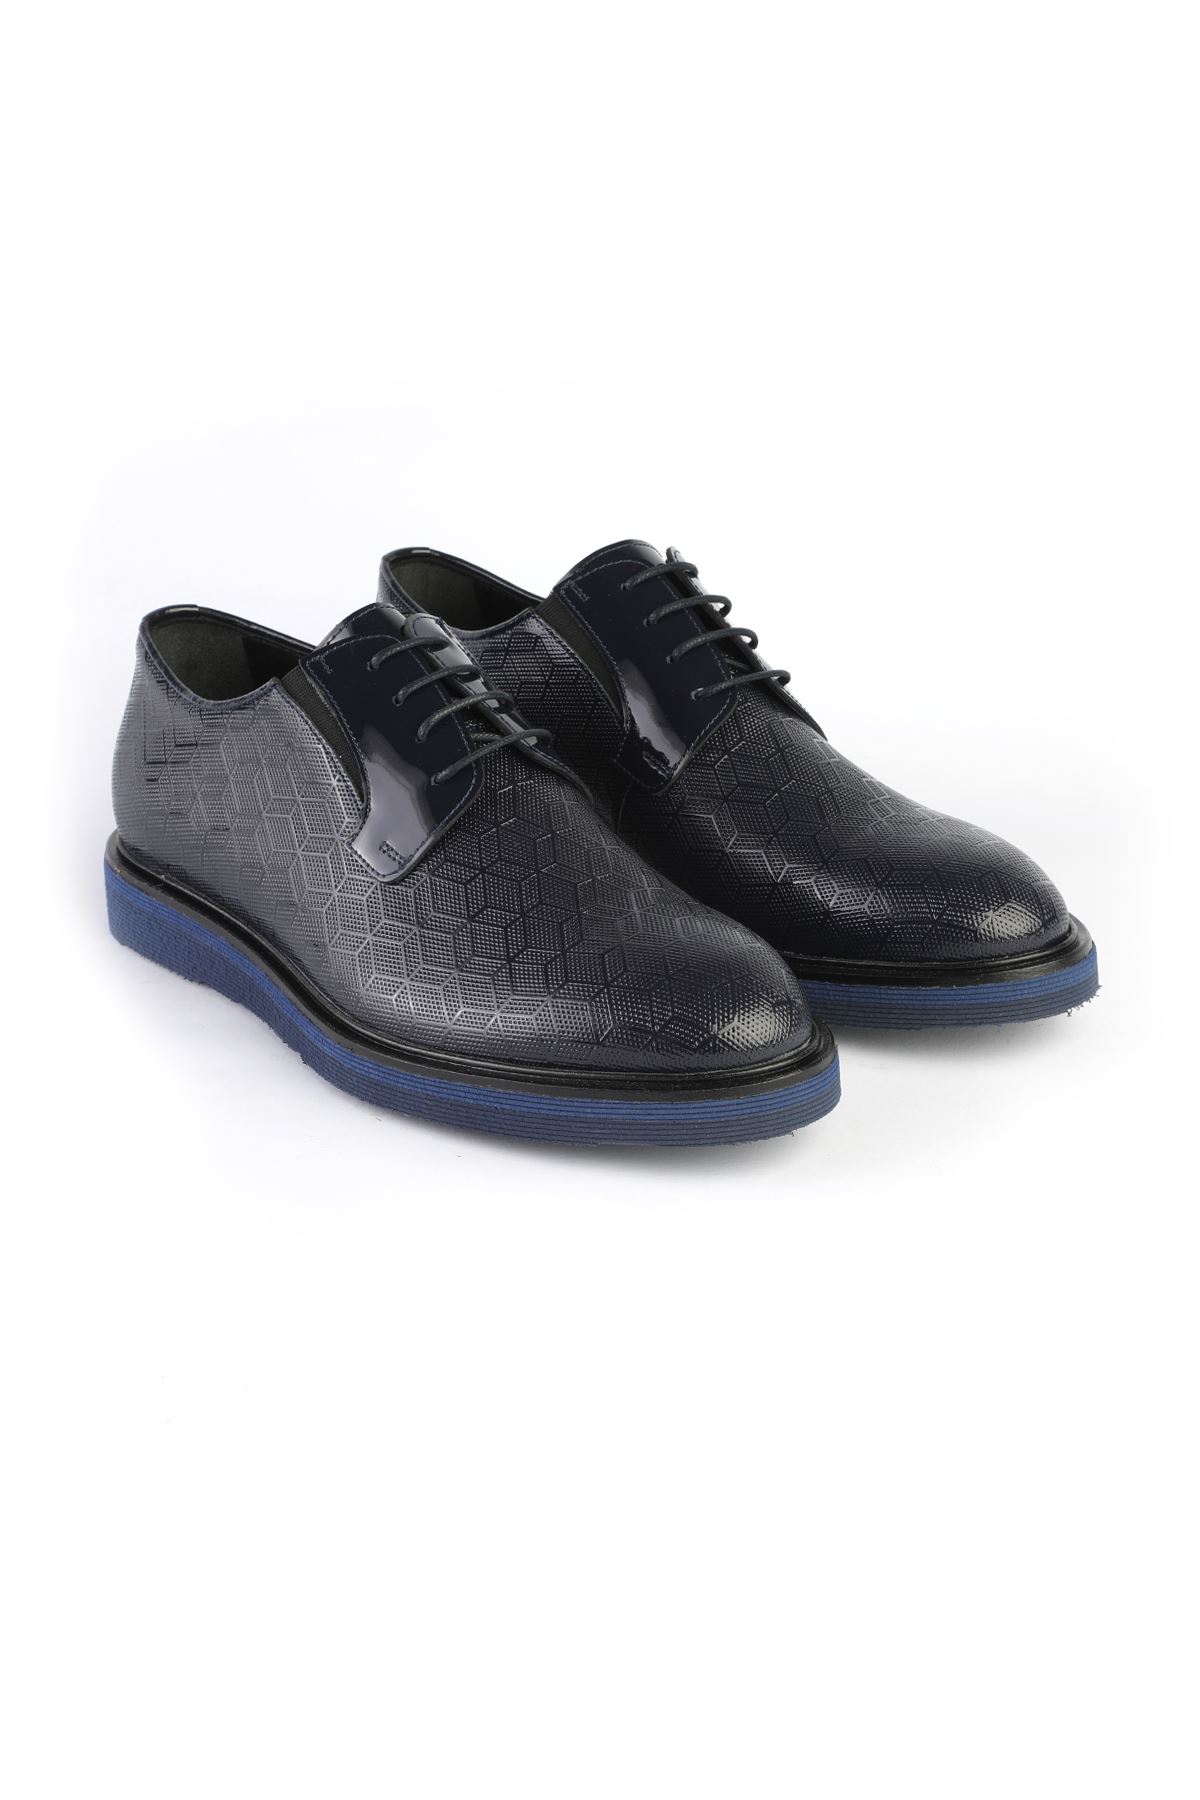 Libero 3234 Navy Blue Oxford Shoes